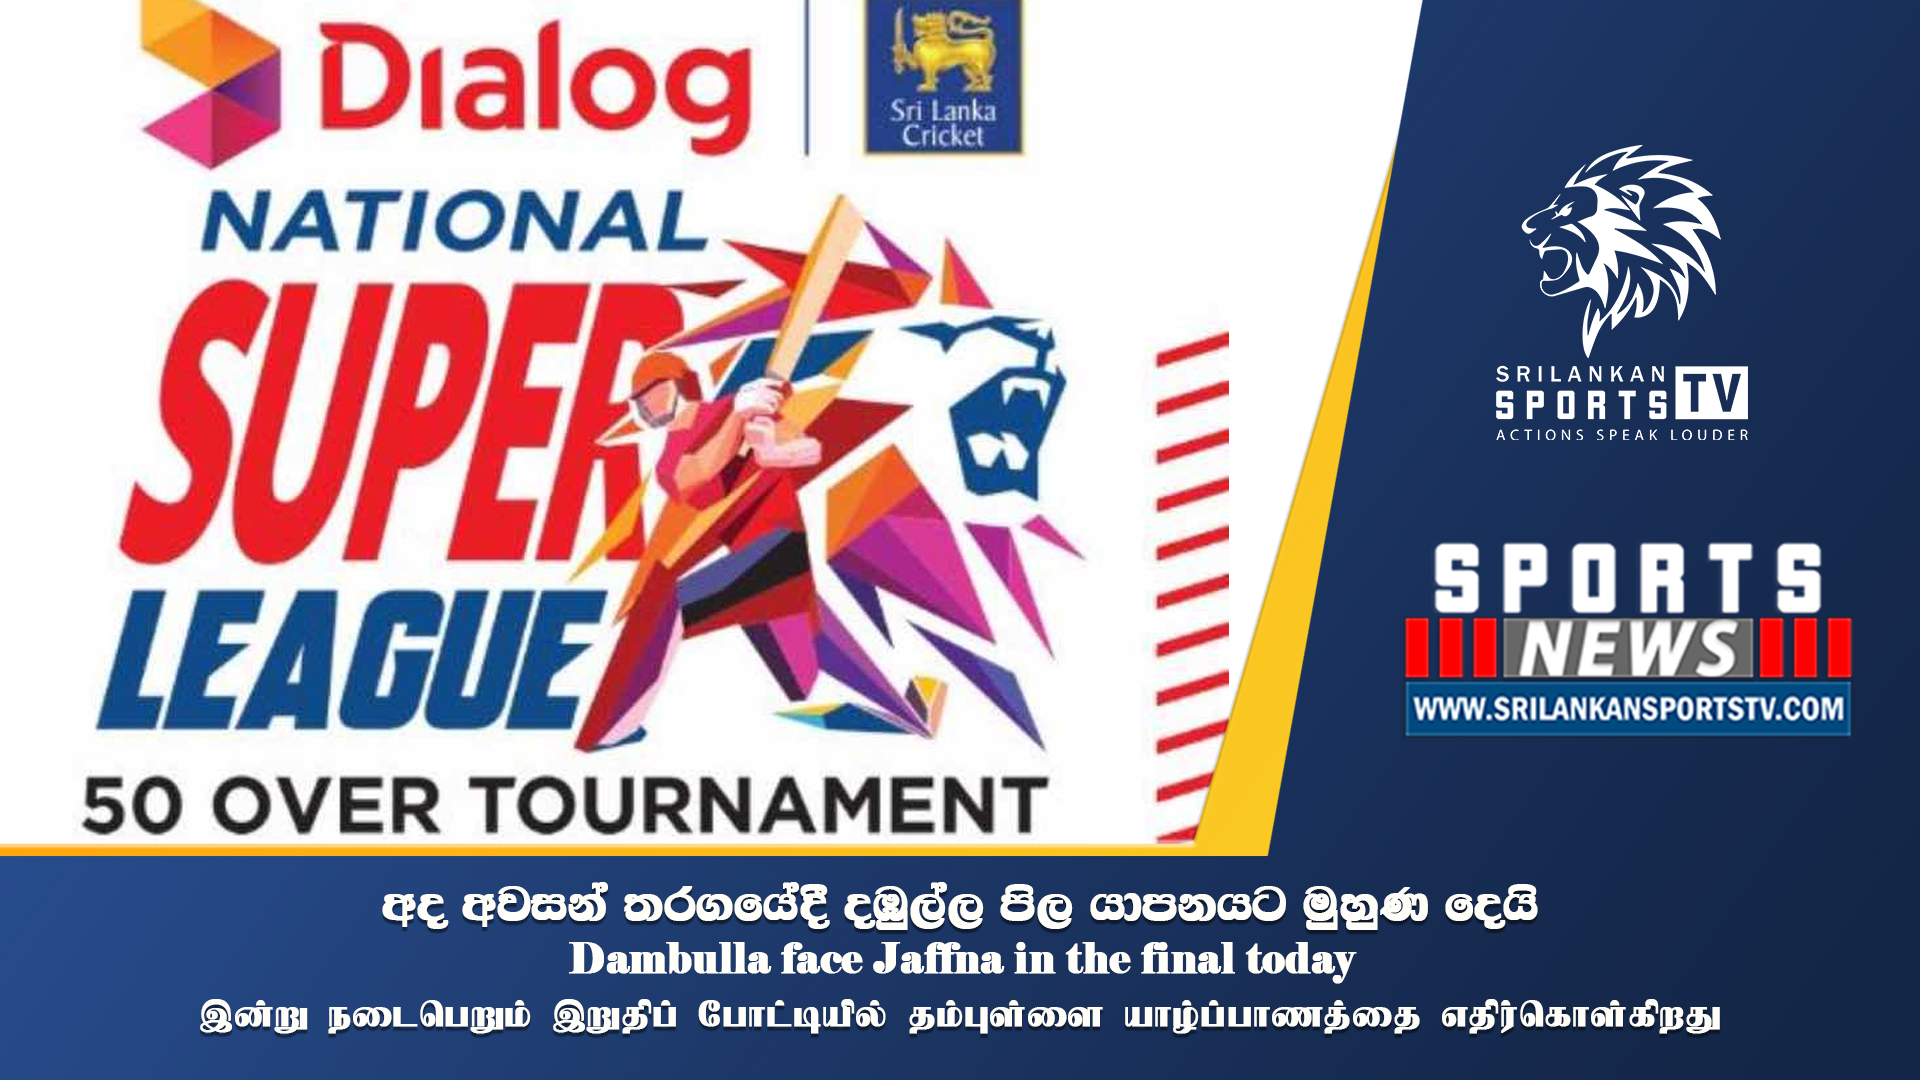 Dambulla face Jaffna in the final today